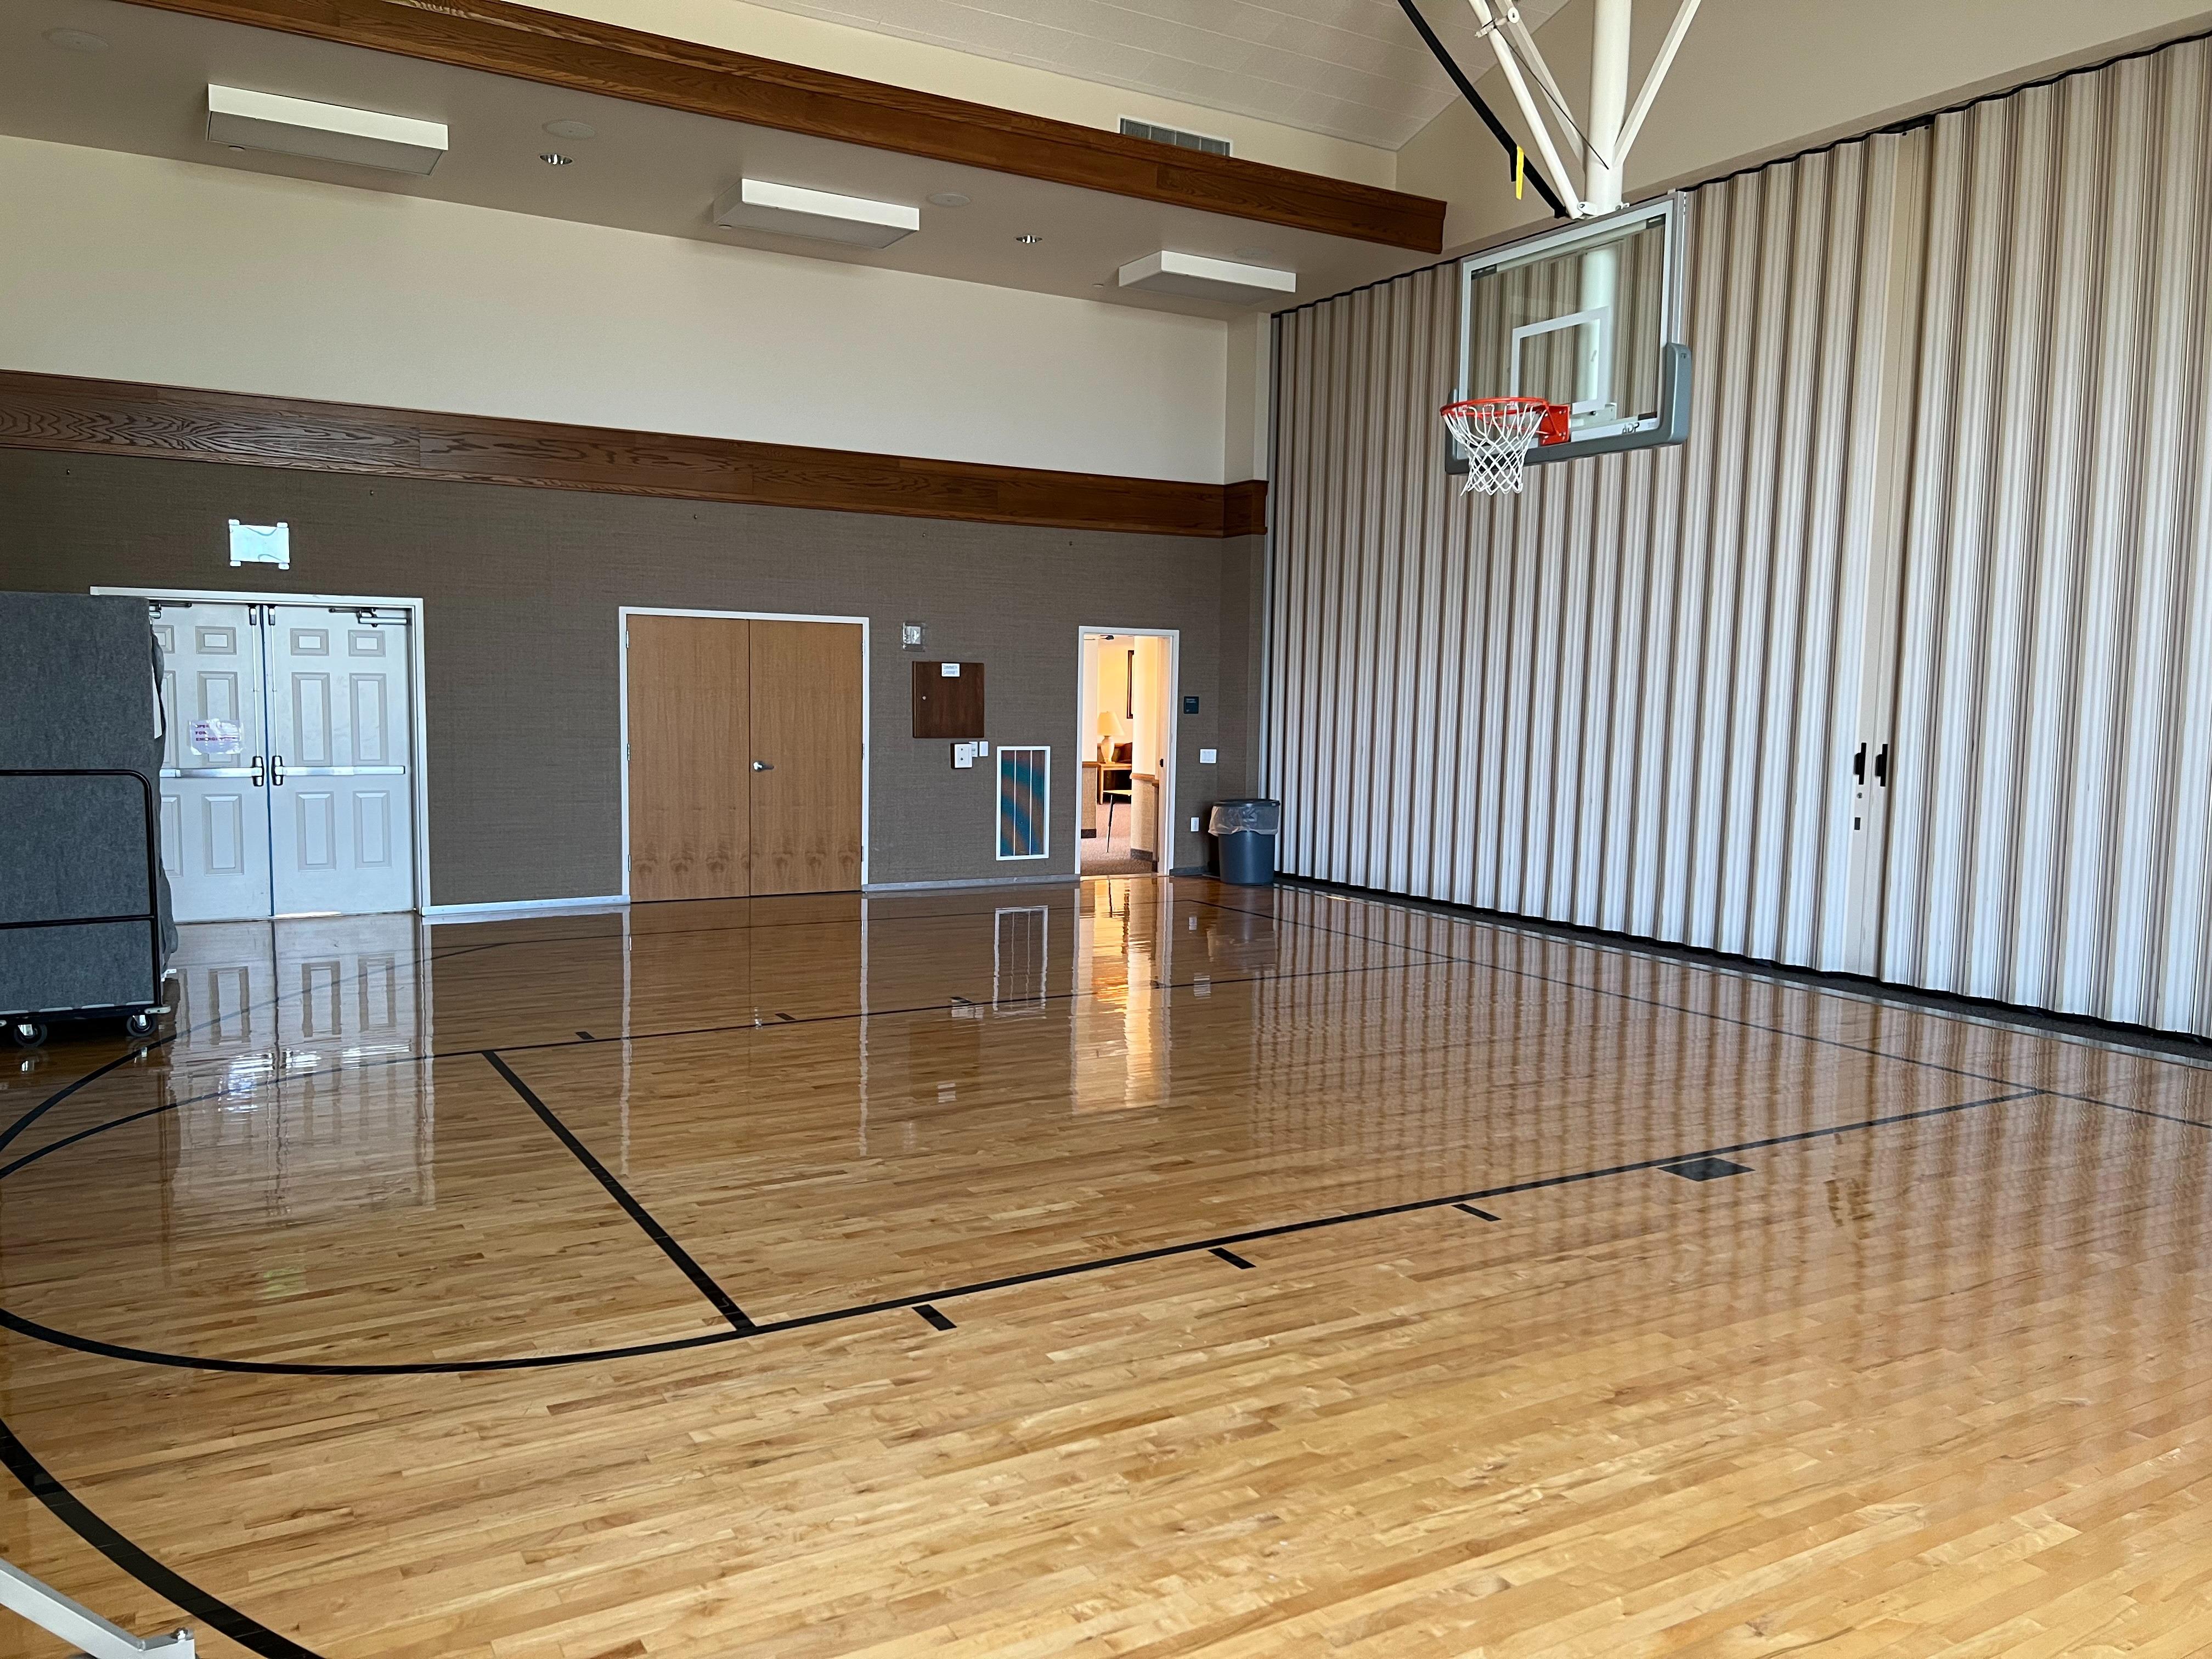 Cultural Hall and Basketball Court, Wamego Ward